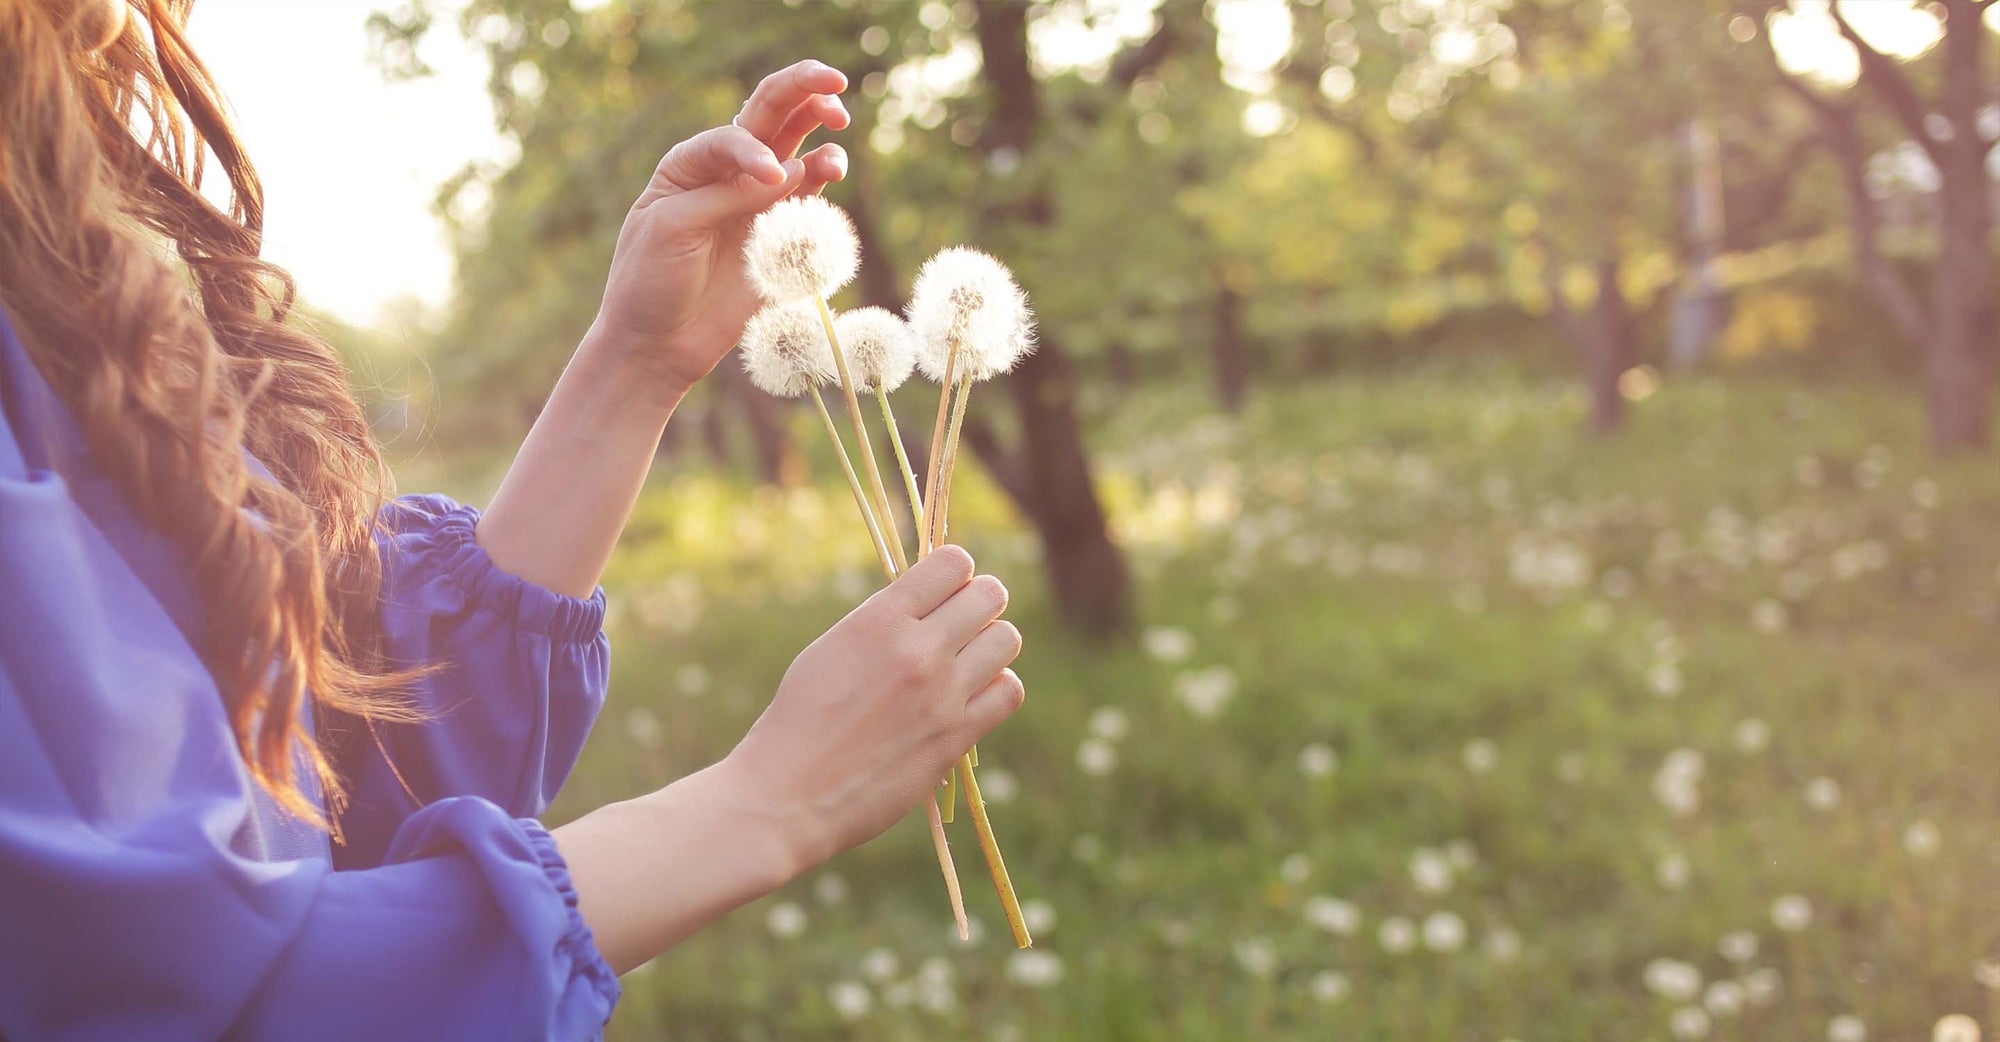 Woman holding dandelions in hand outside